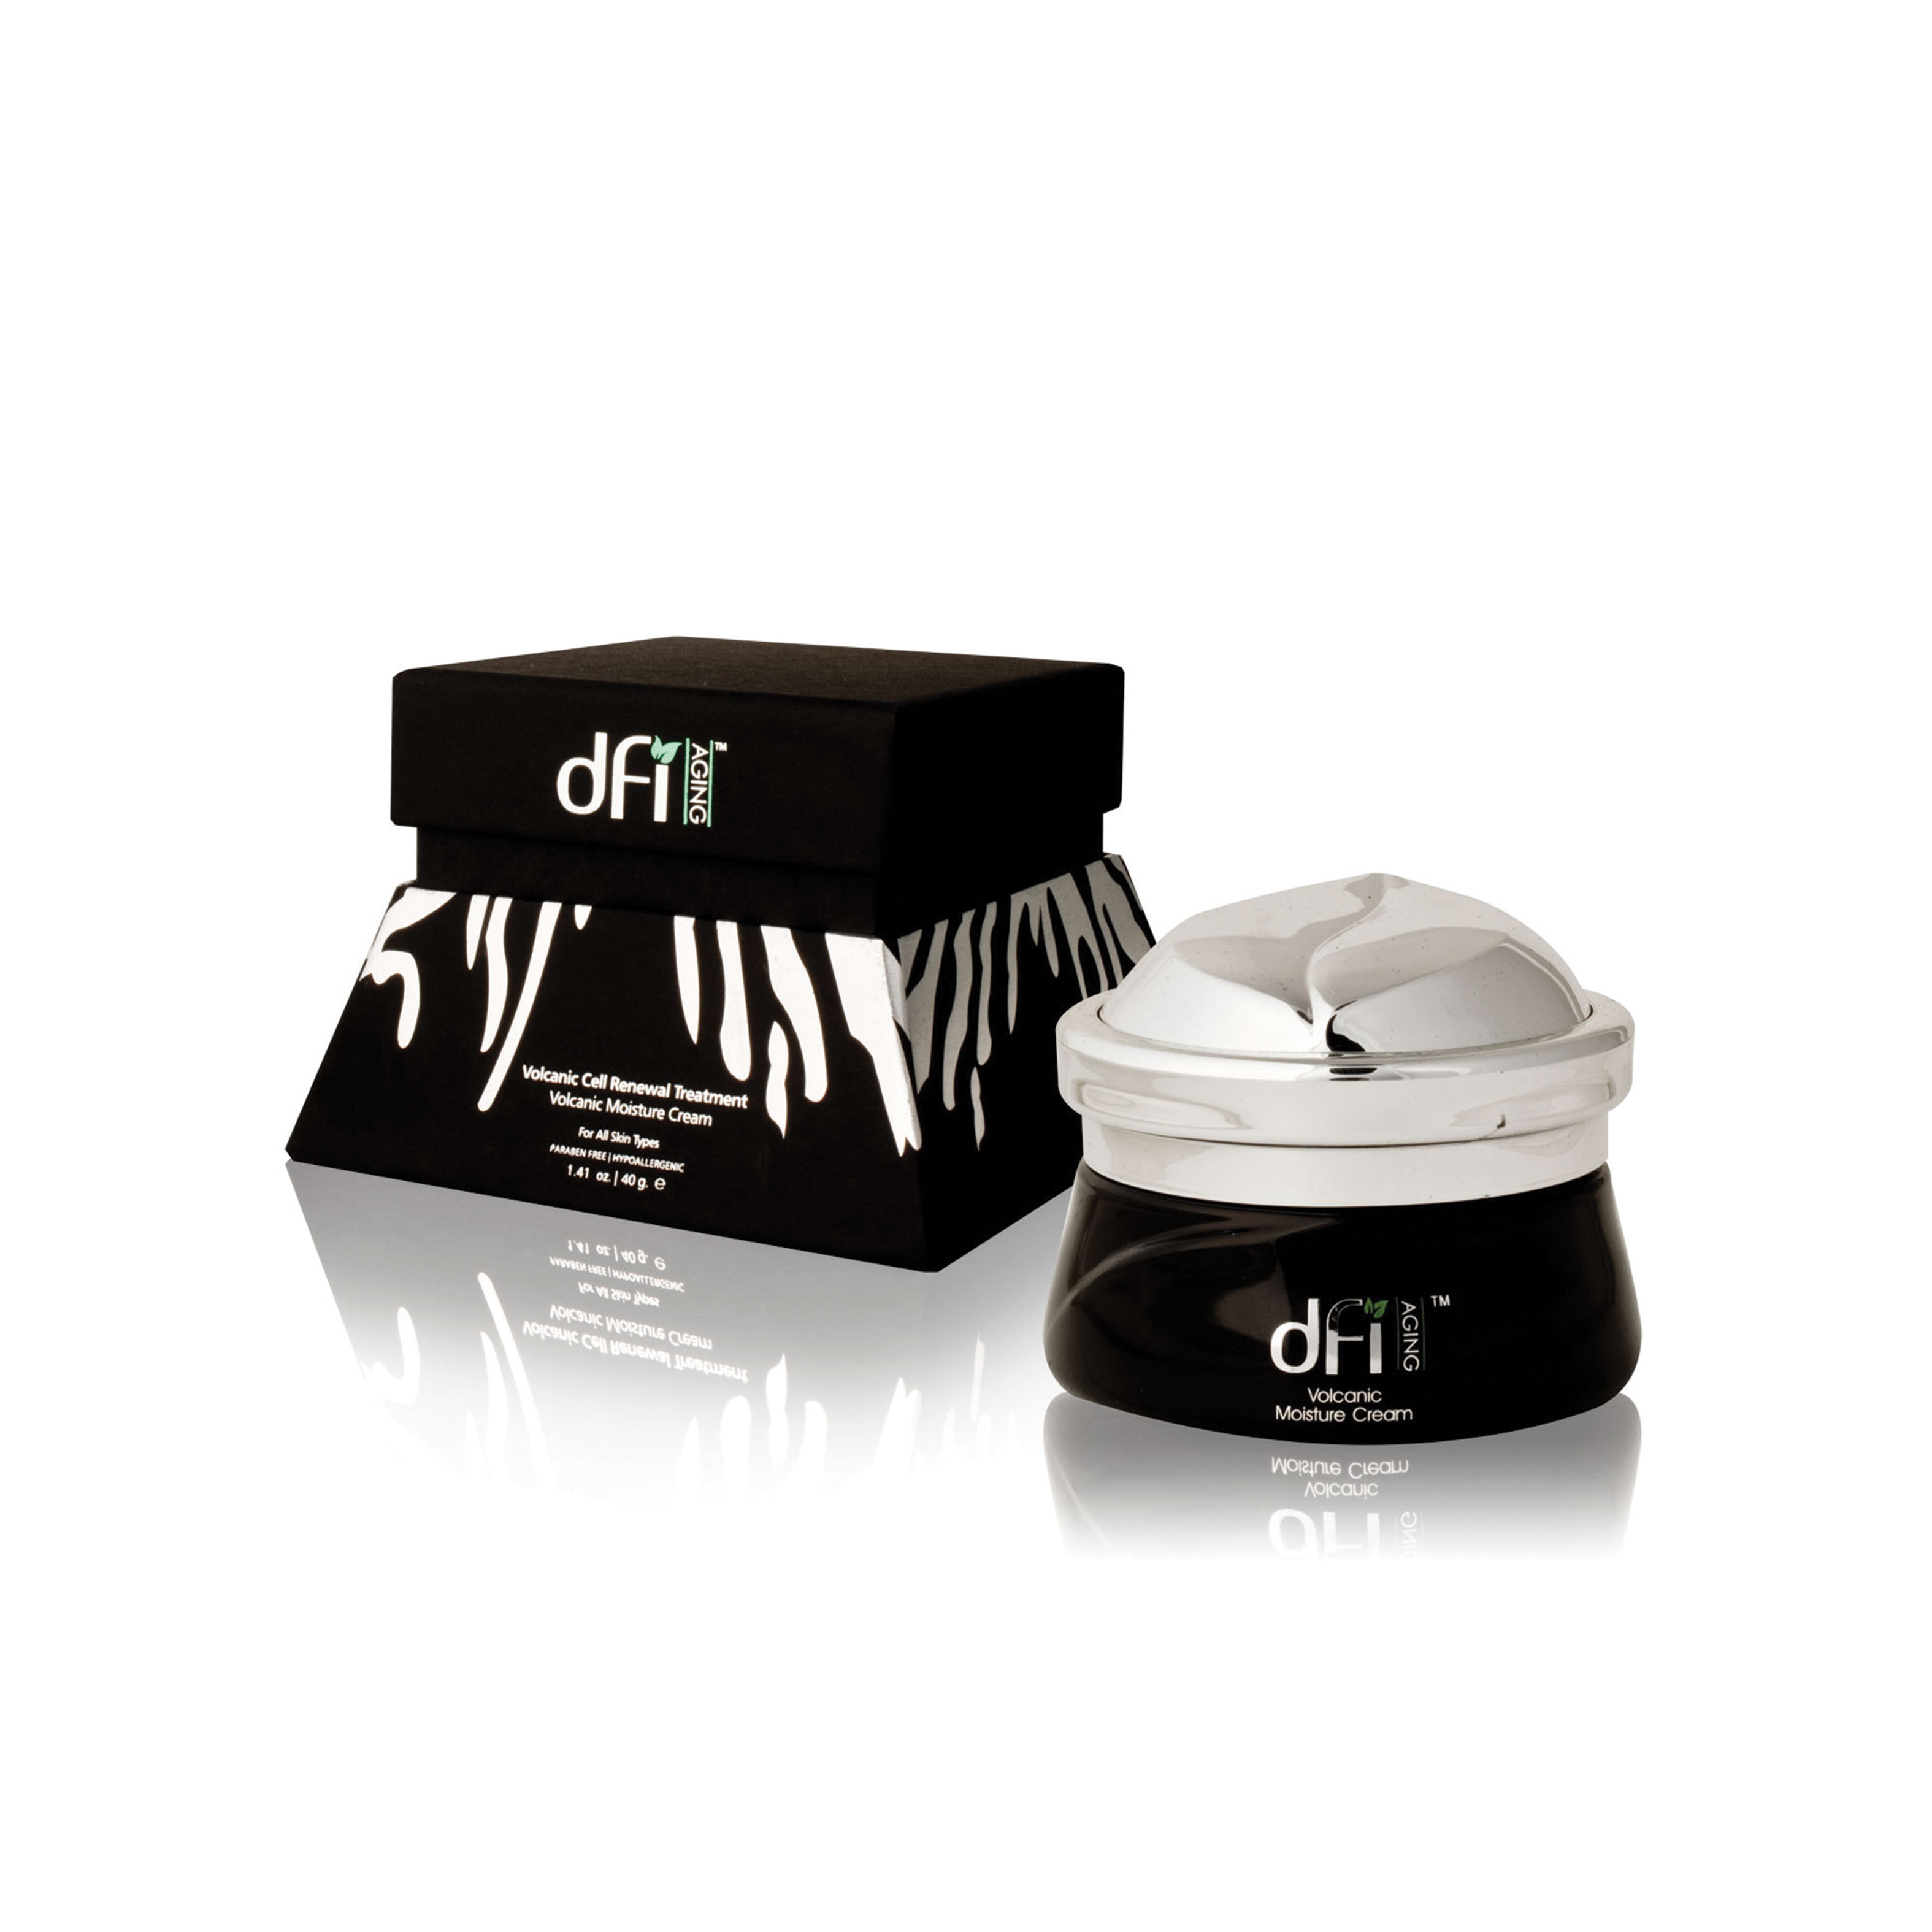 Product Branding and Packaging Design for dfi Aging Skincare's Volcanic Moisture Cream